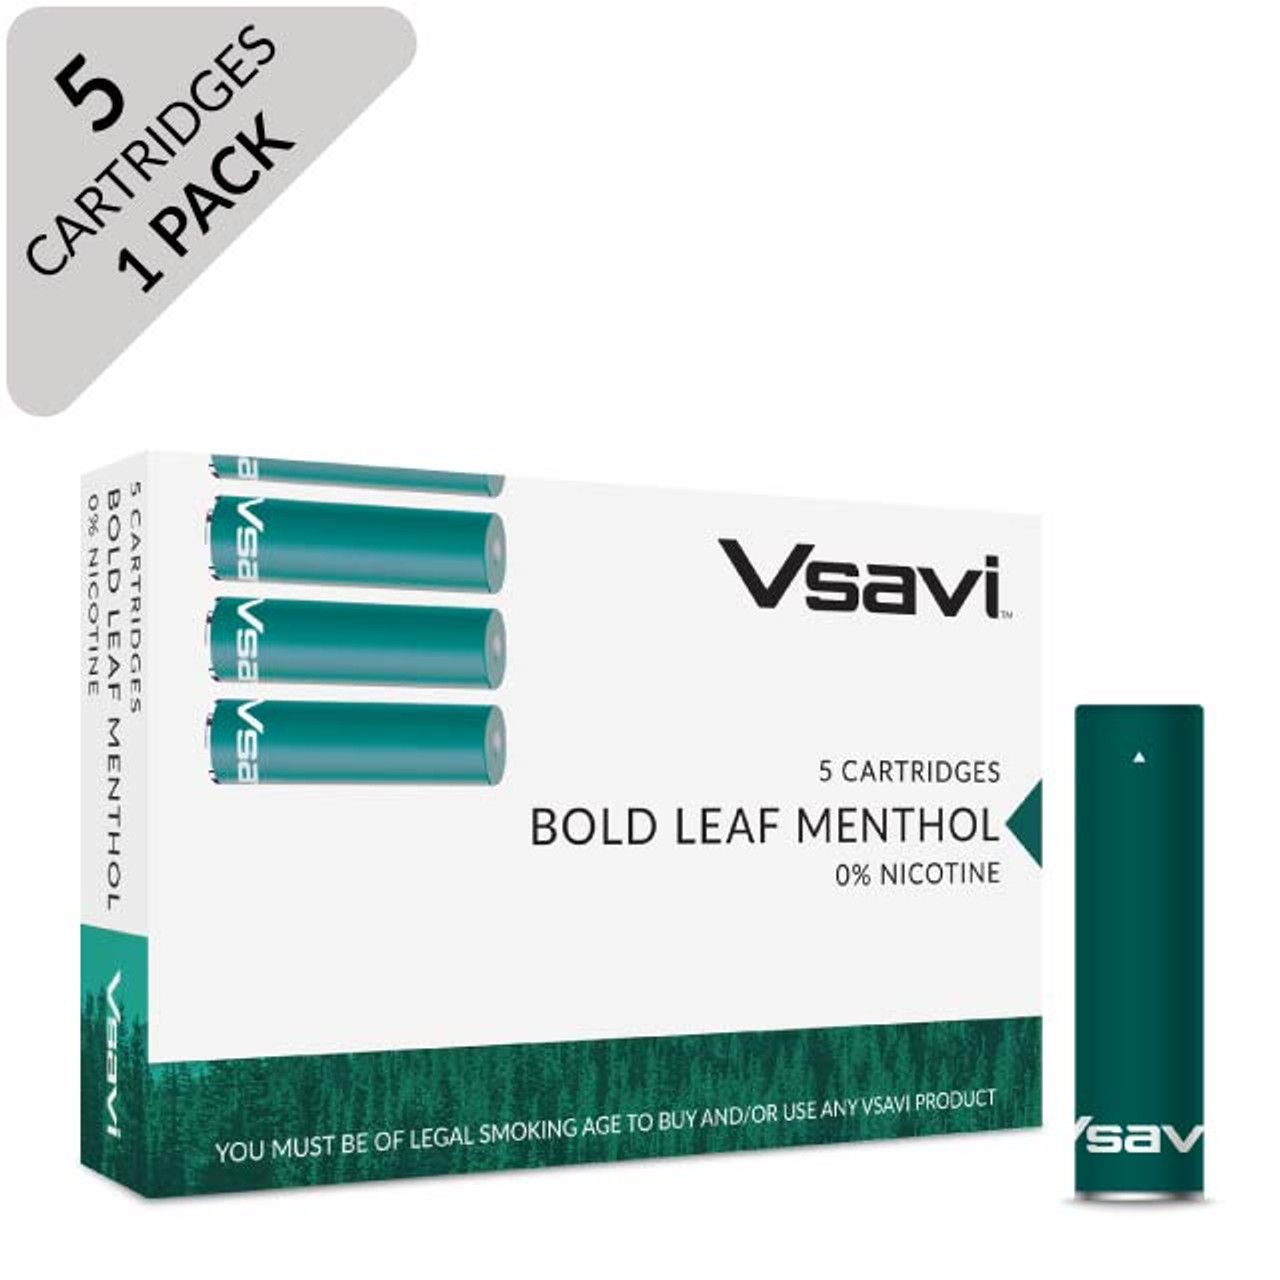 Vsavi Classic Catridges 5-pack bold leaf menthol